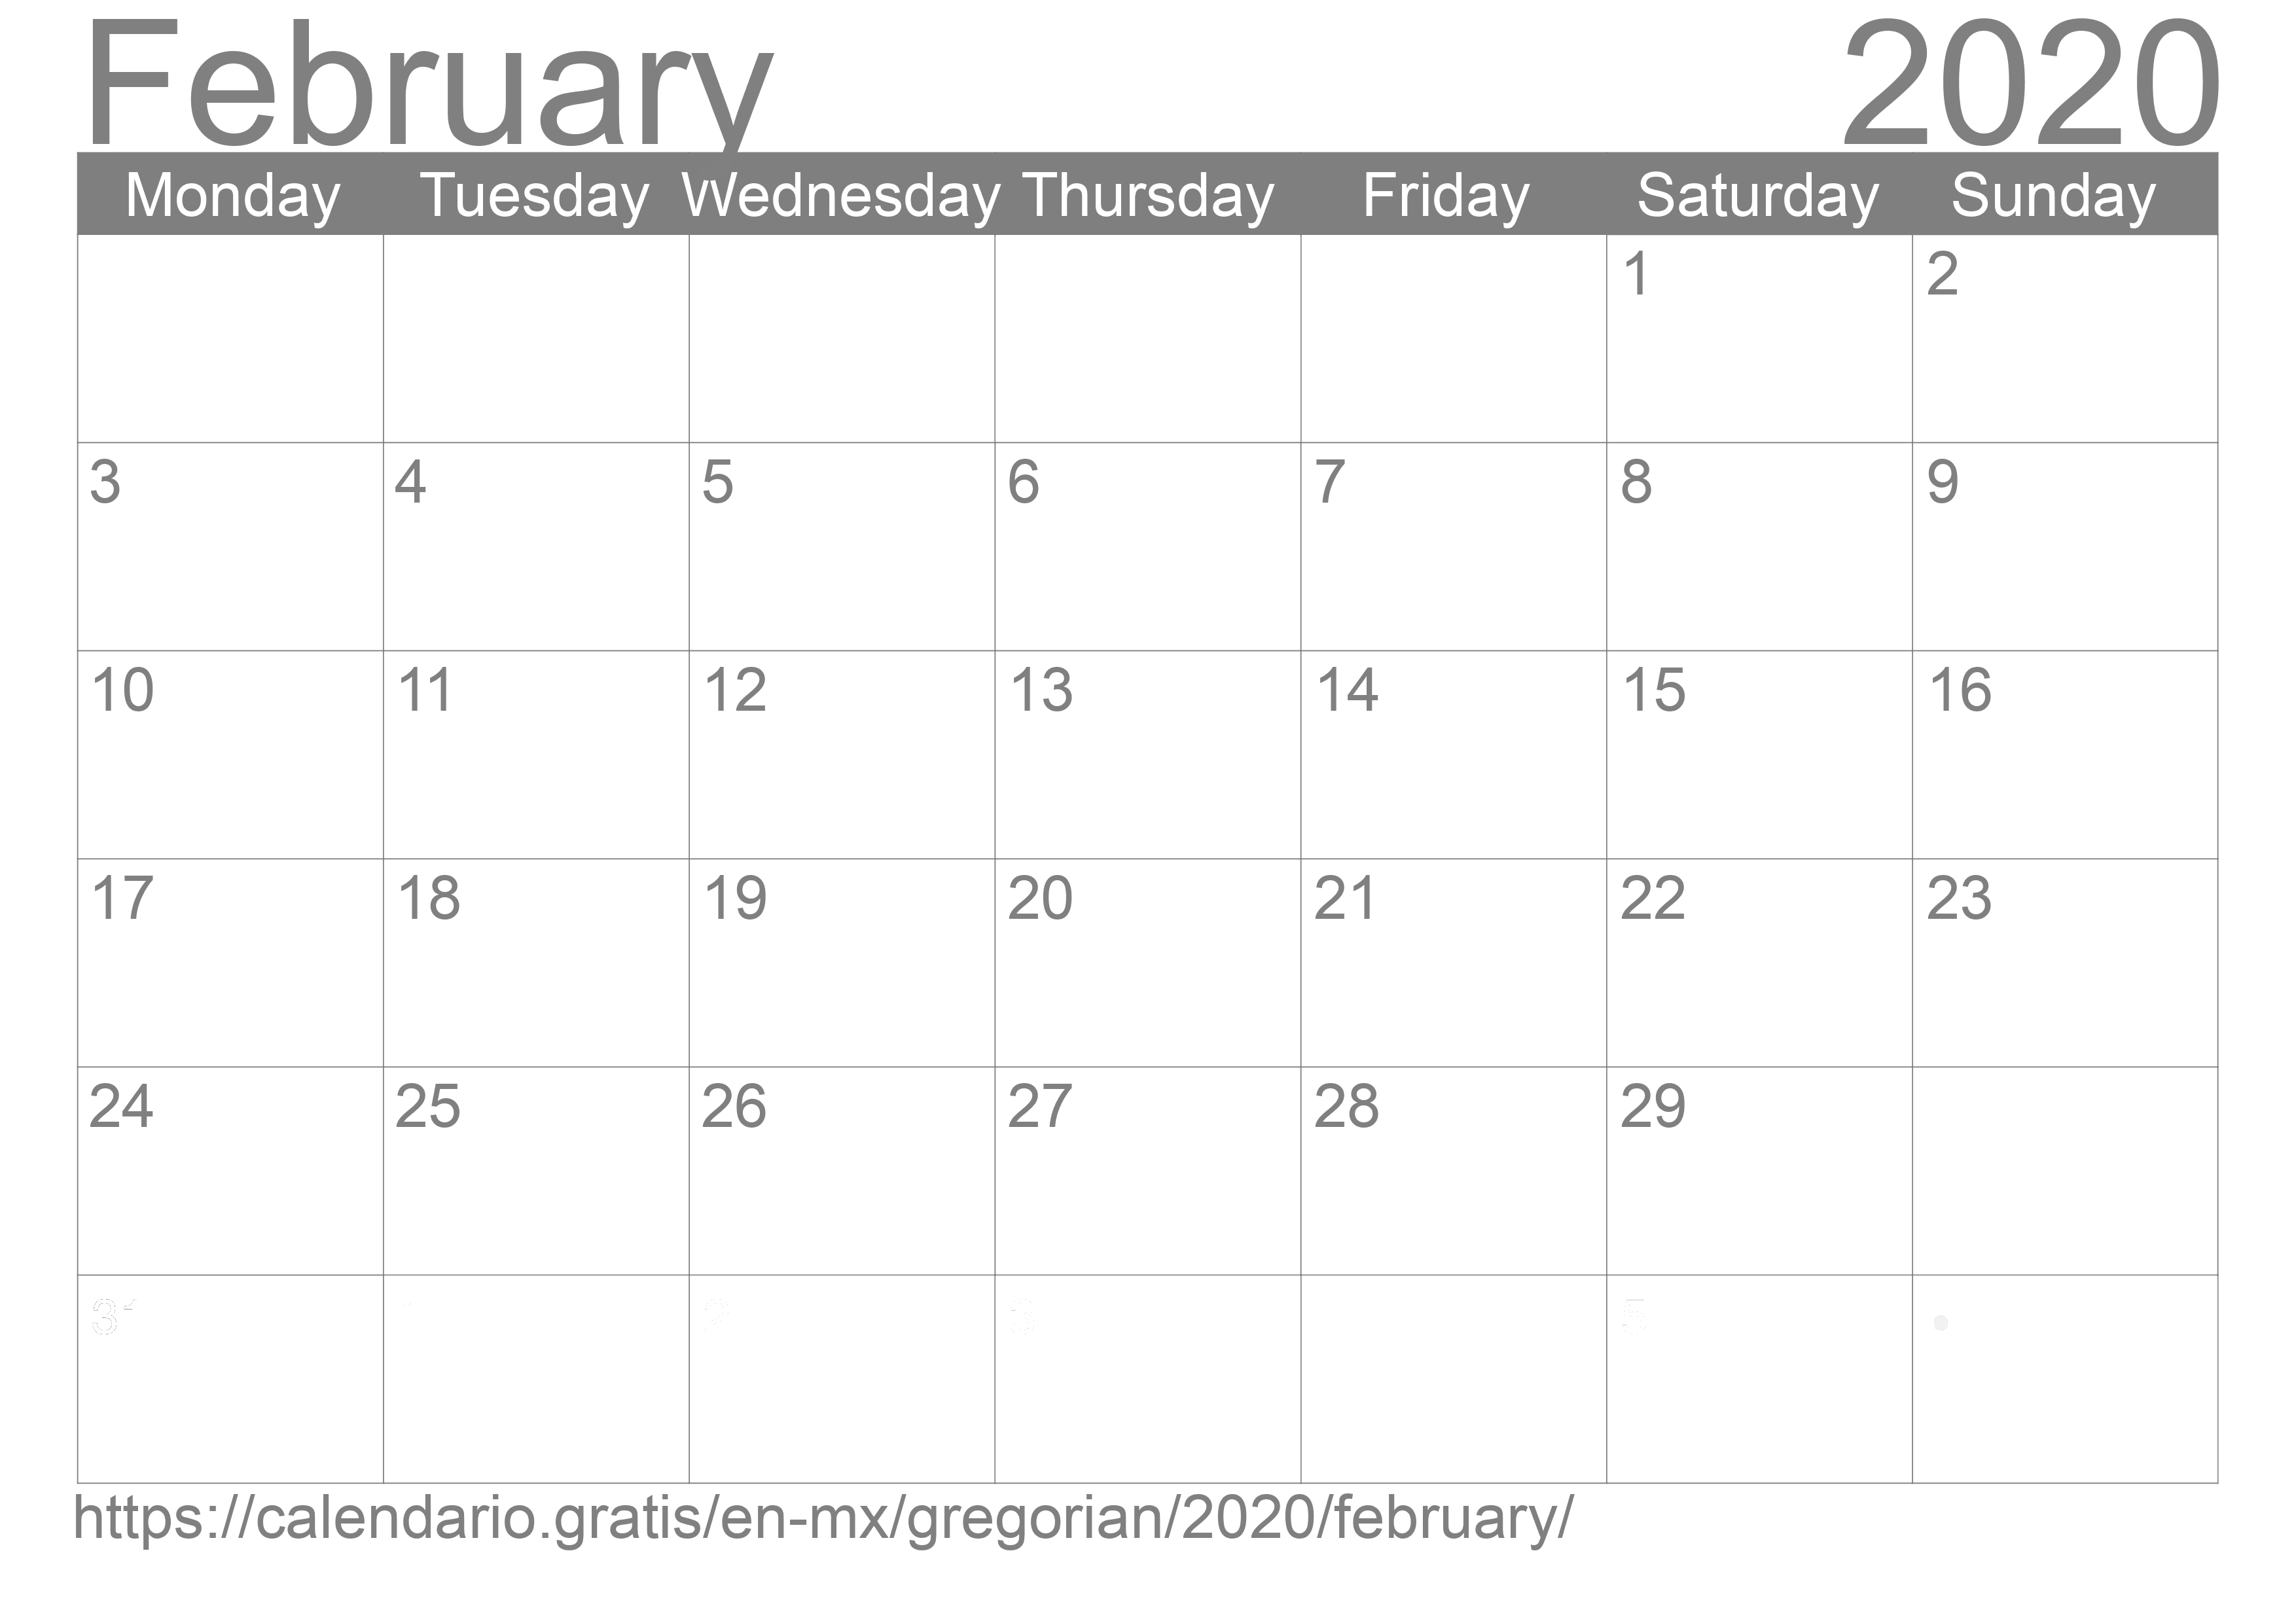 Calendar February 2020 to print